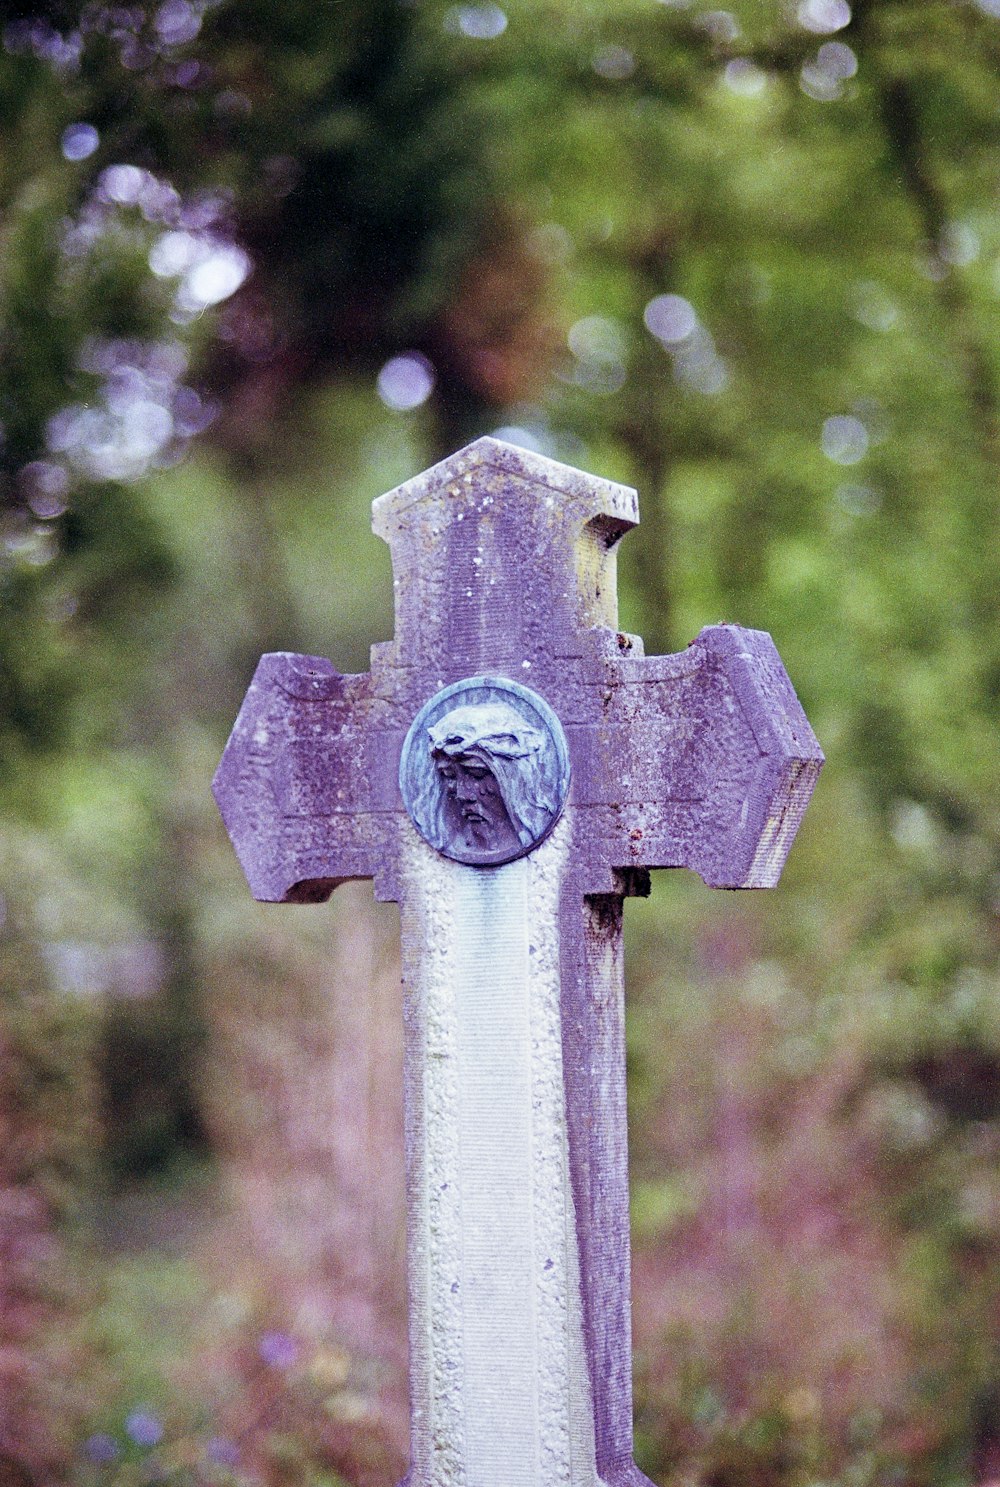 a close up of a cross on a pole